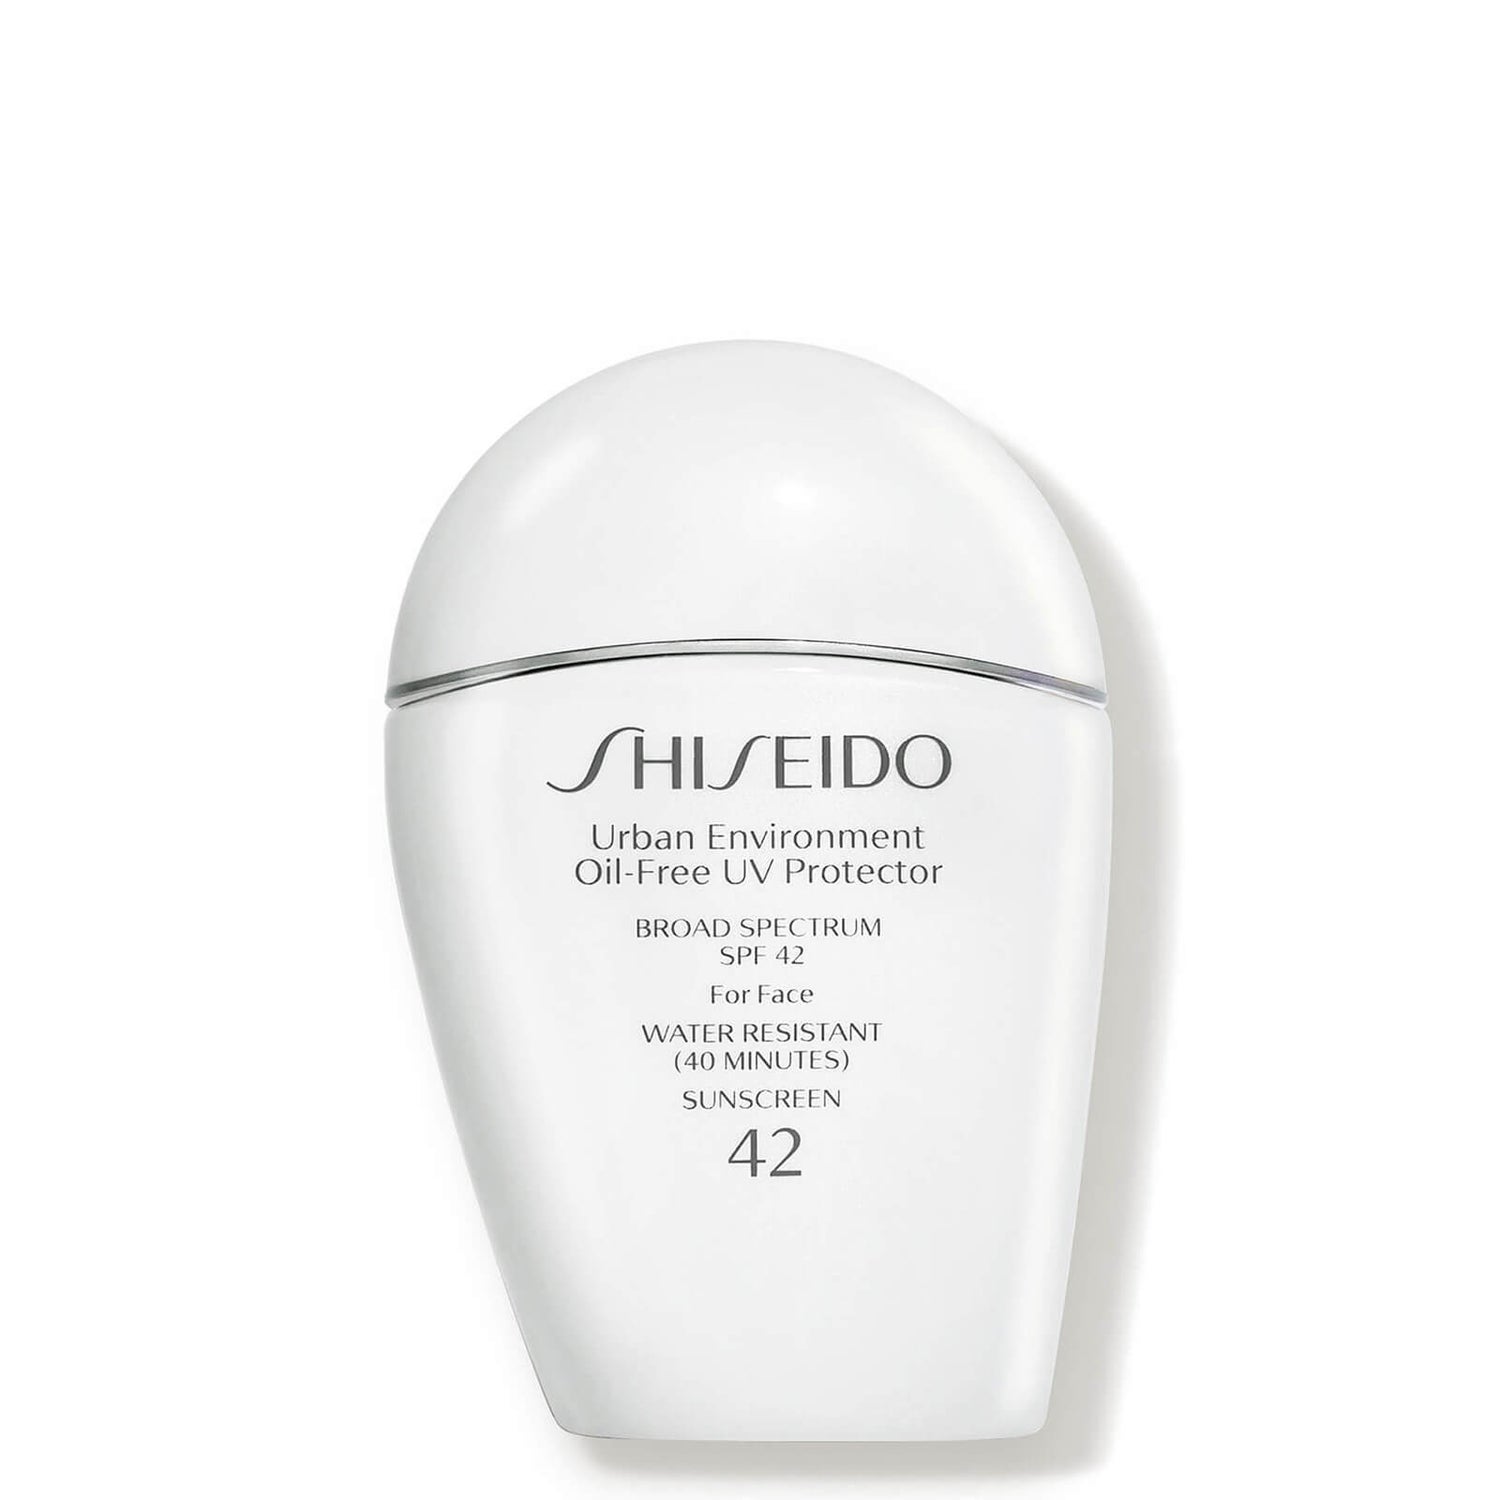 Shiseido Urban Environment Oil-Free UV Protector SPF 42 Sunscreen (30 ml.)